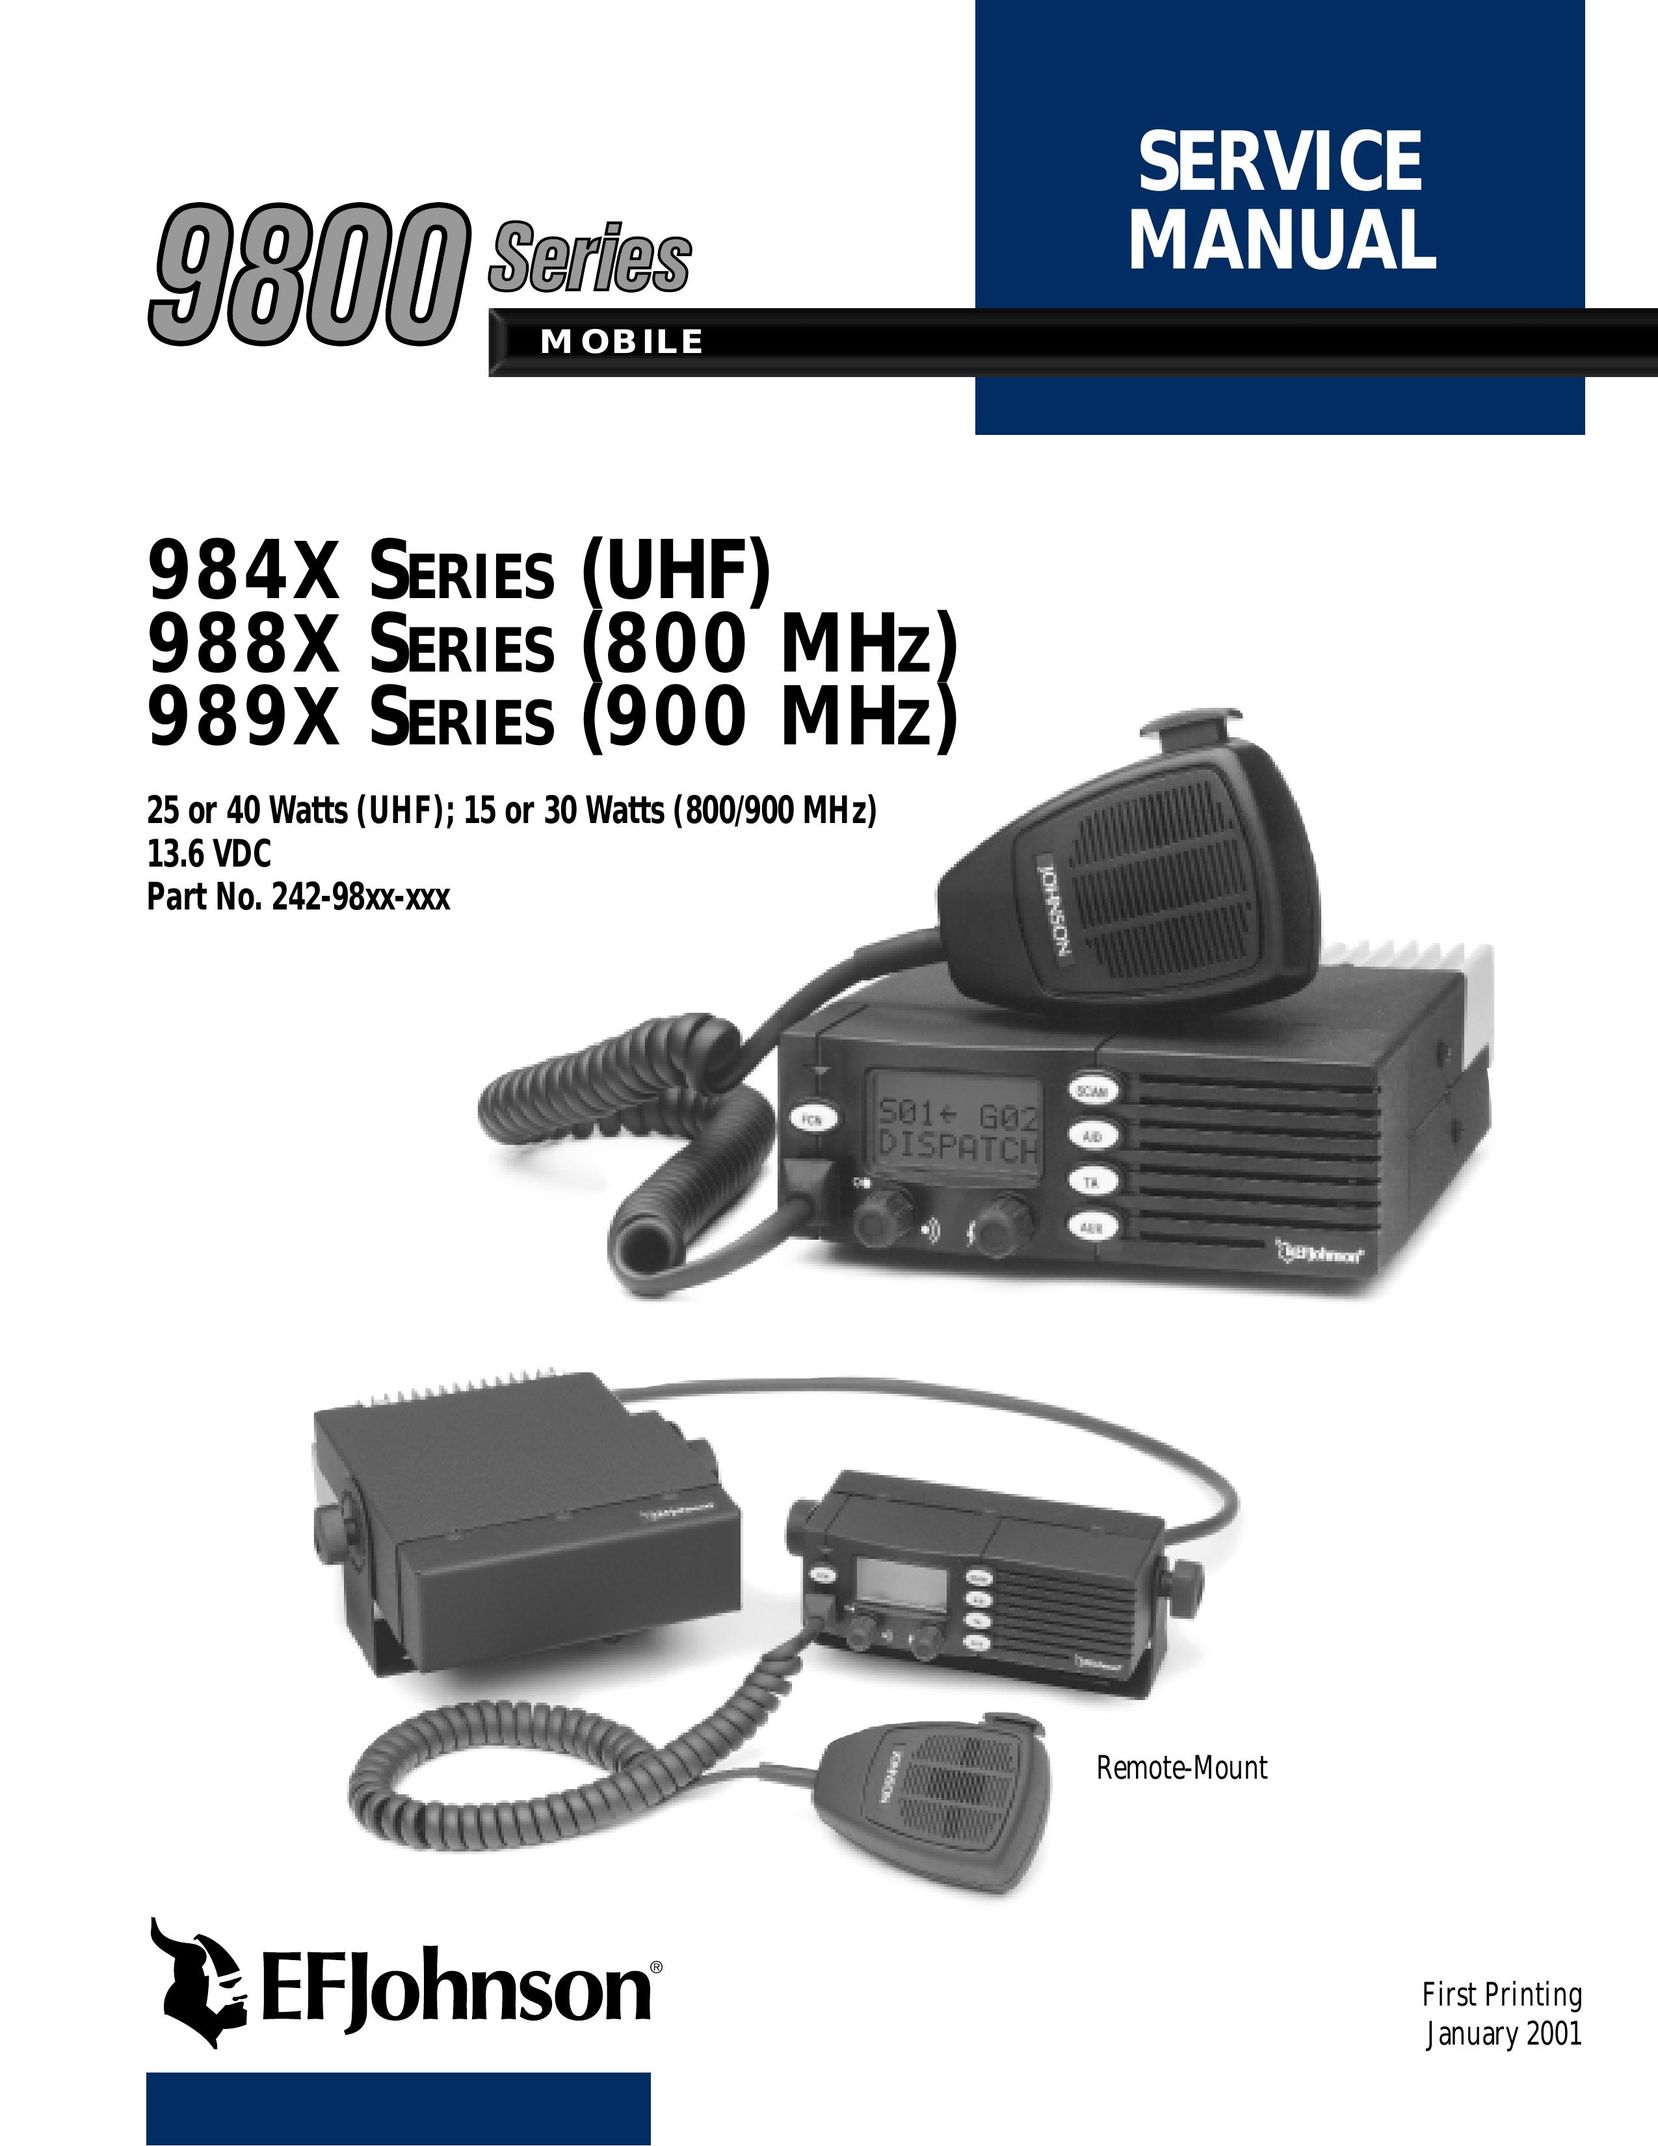 EFJohnson 988X SERIES Two-Way Radio User Manual